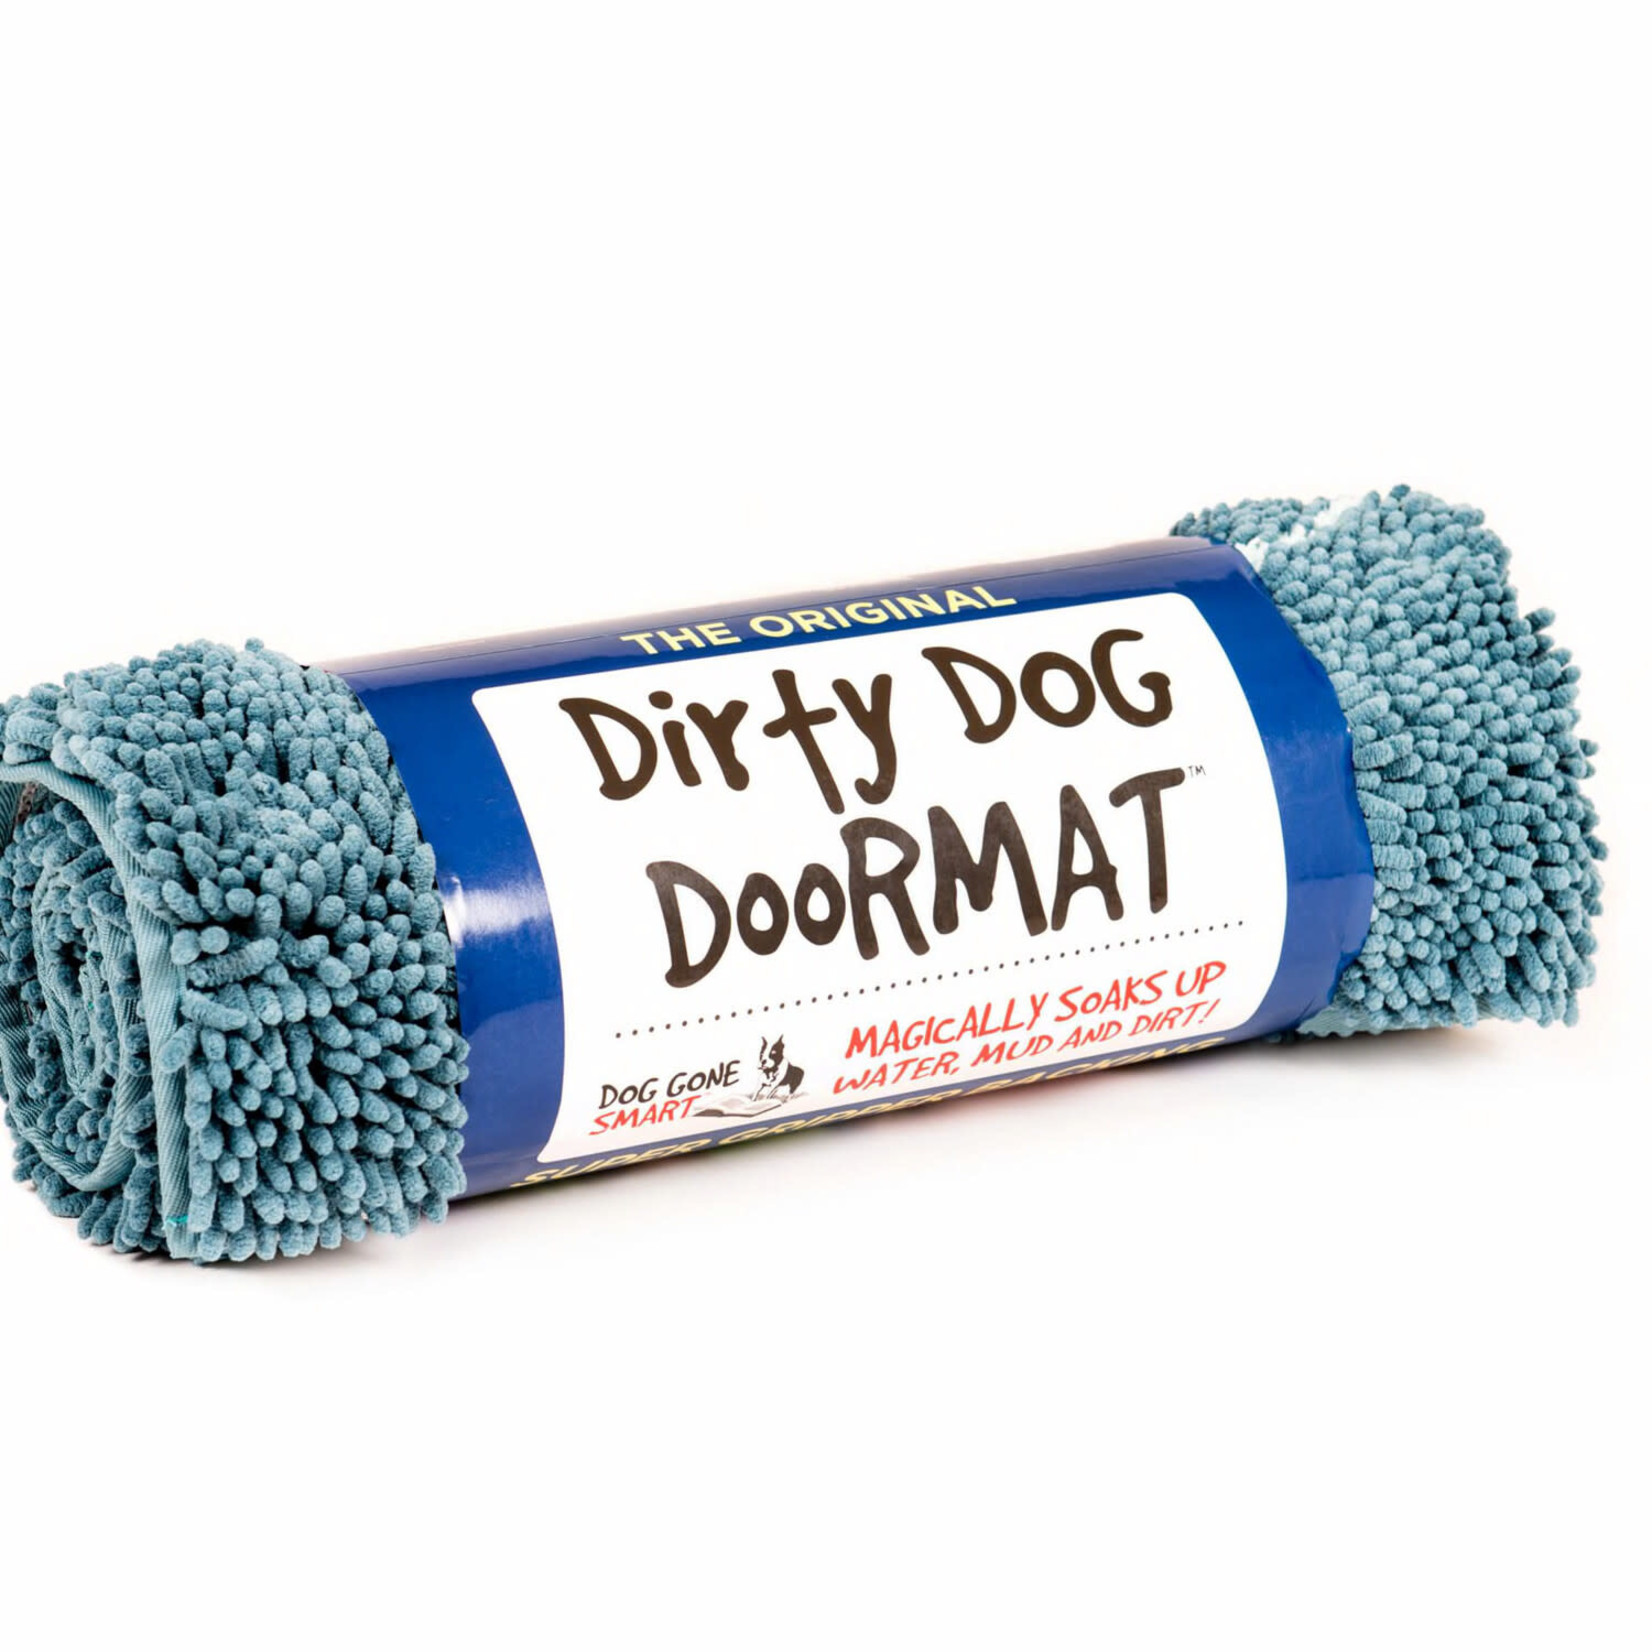 Dog Gone Smart Dirty Dog: Doormat Large 26" x 35"